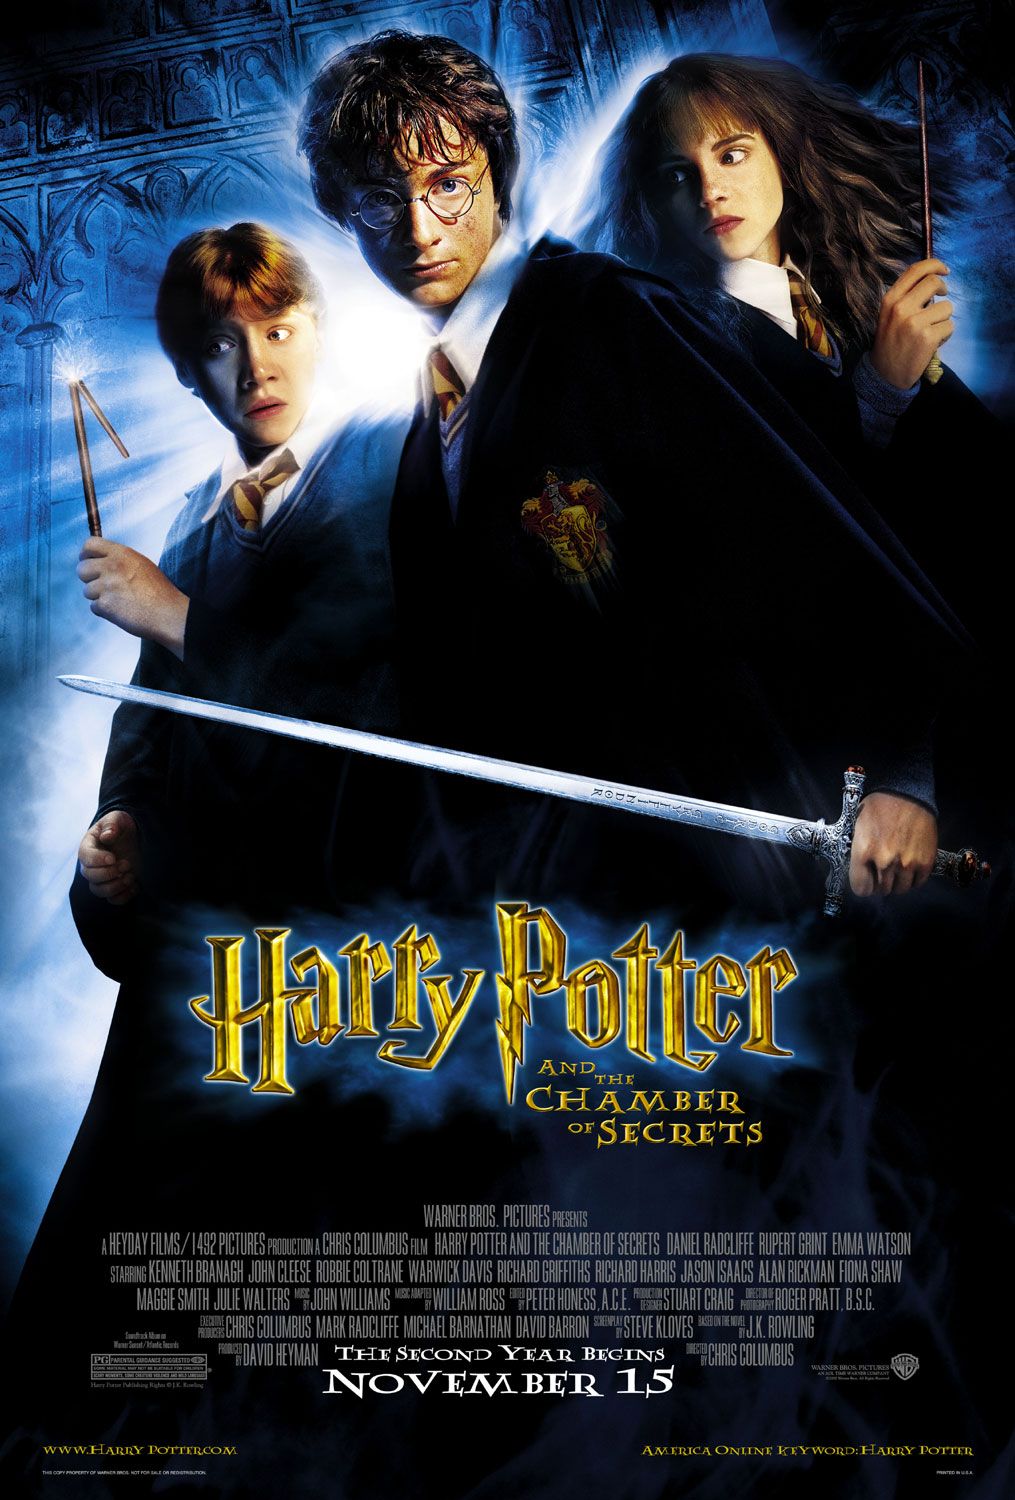 Постер - Гарри Поттер и Тайная комната: 1015x1500 / 225 Кб